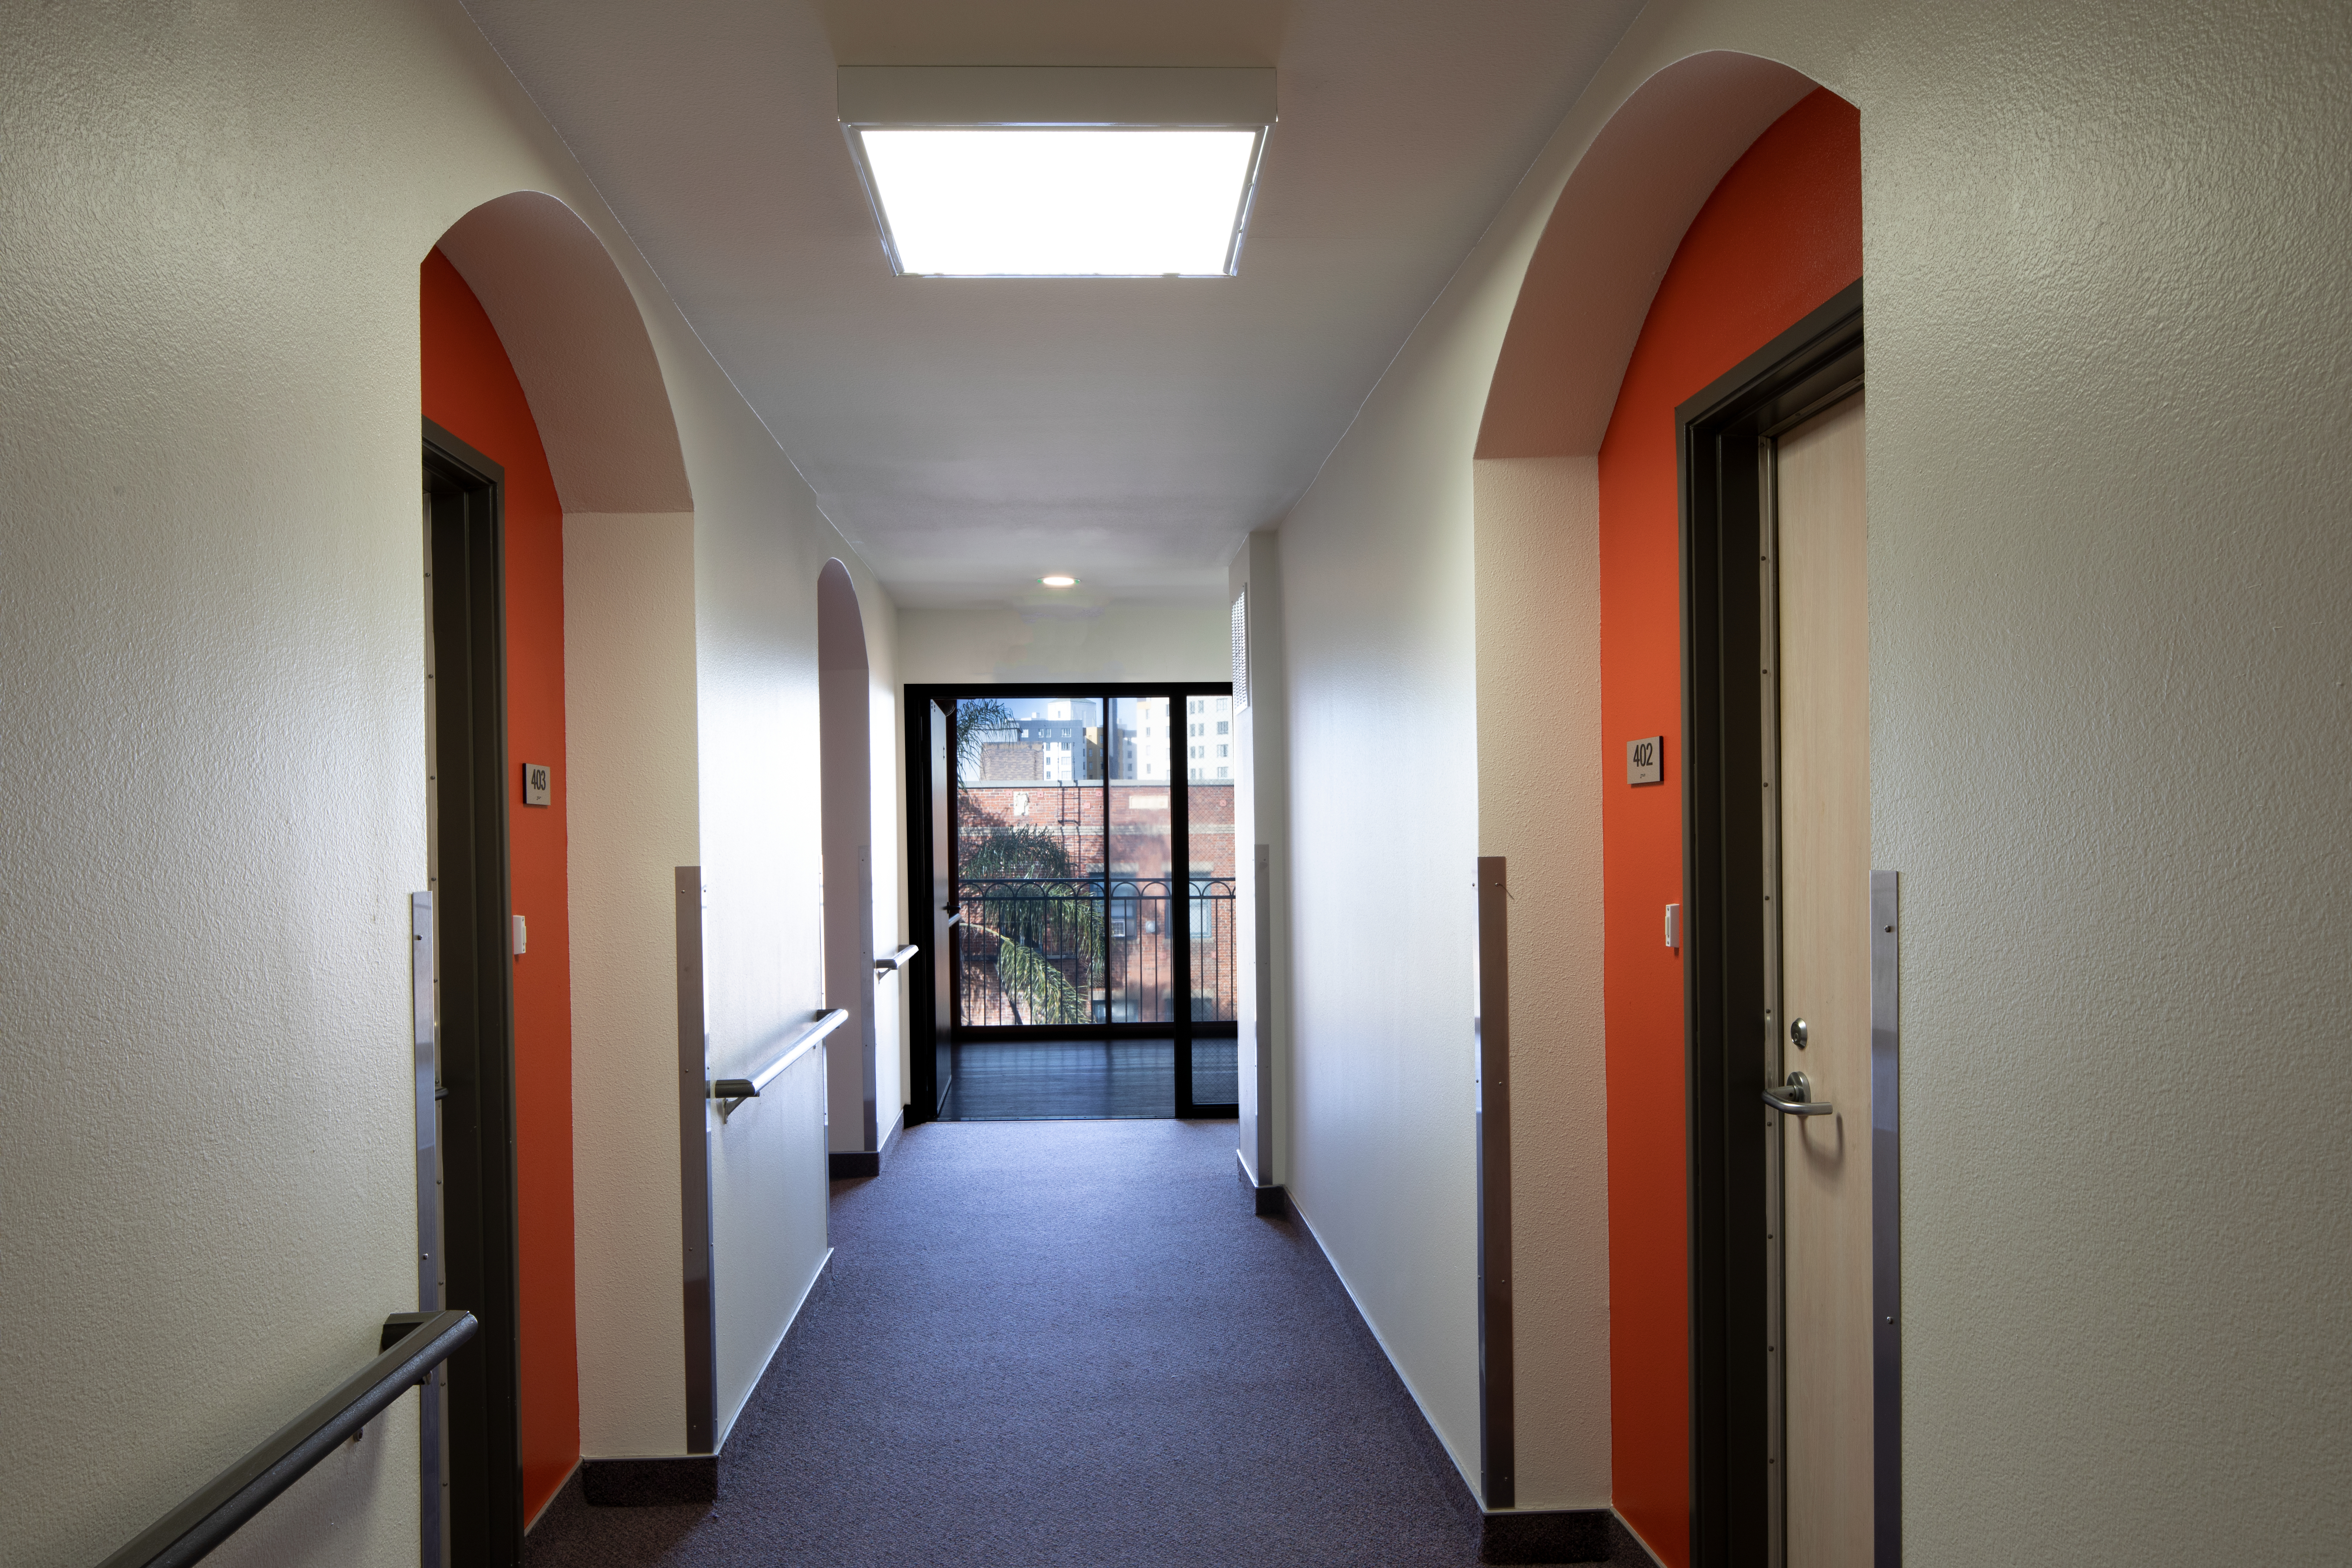 Image of the interior hallway